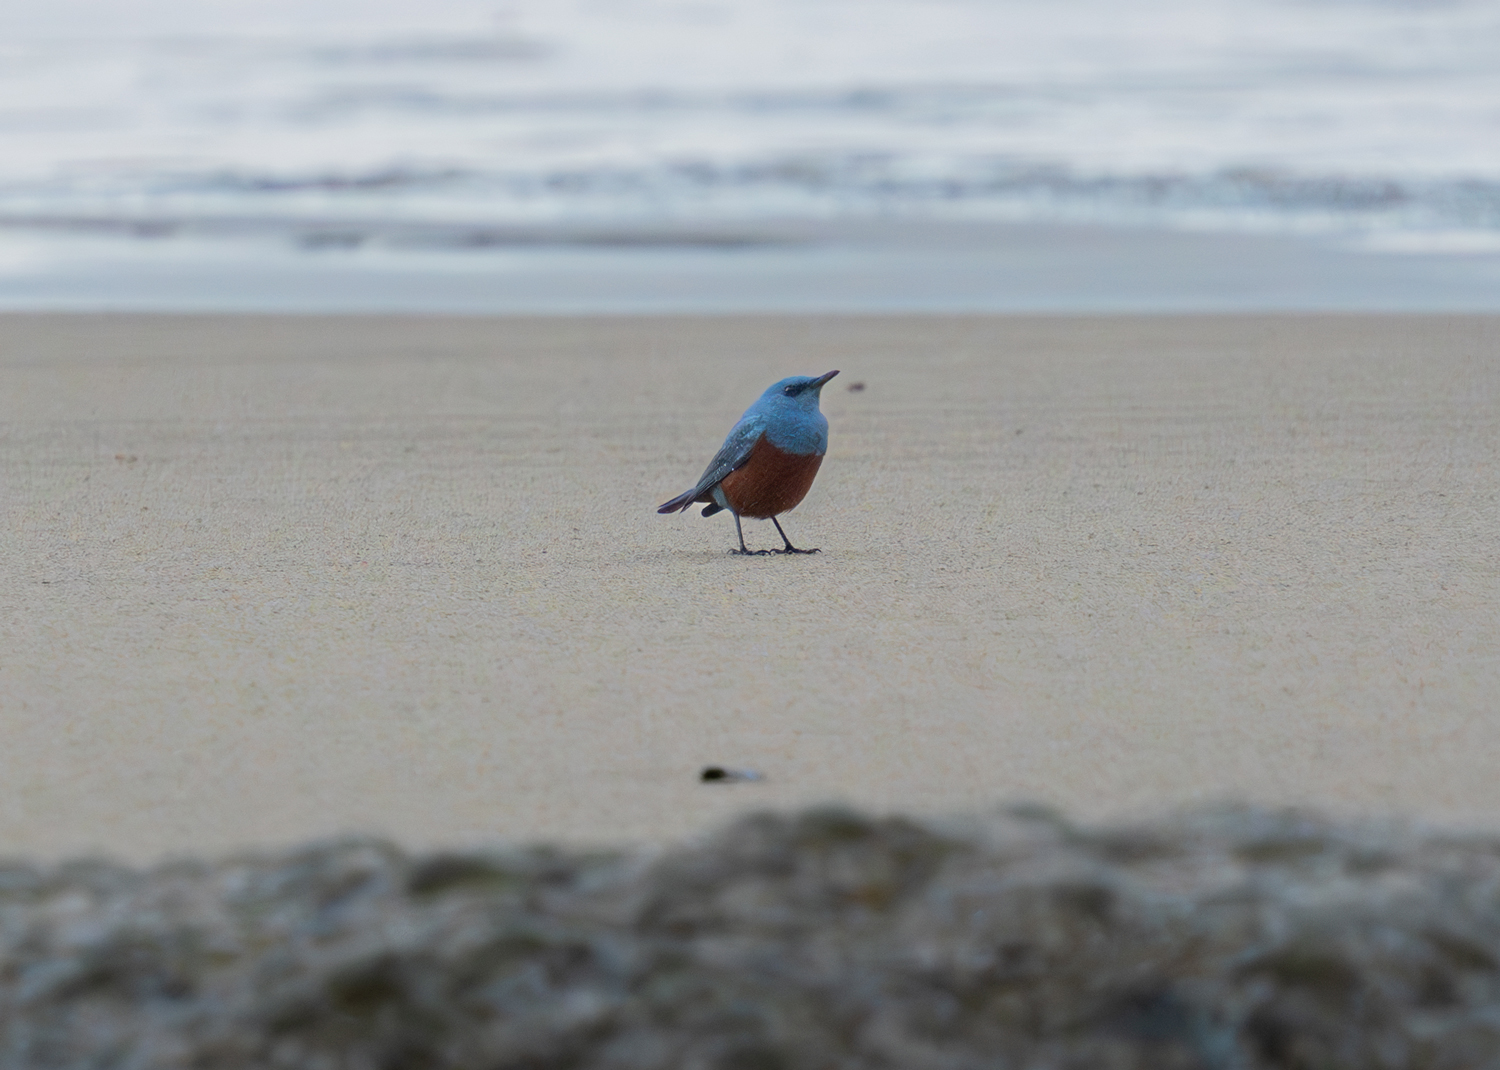 A blue and brown bird stands on a beach.